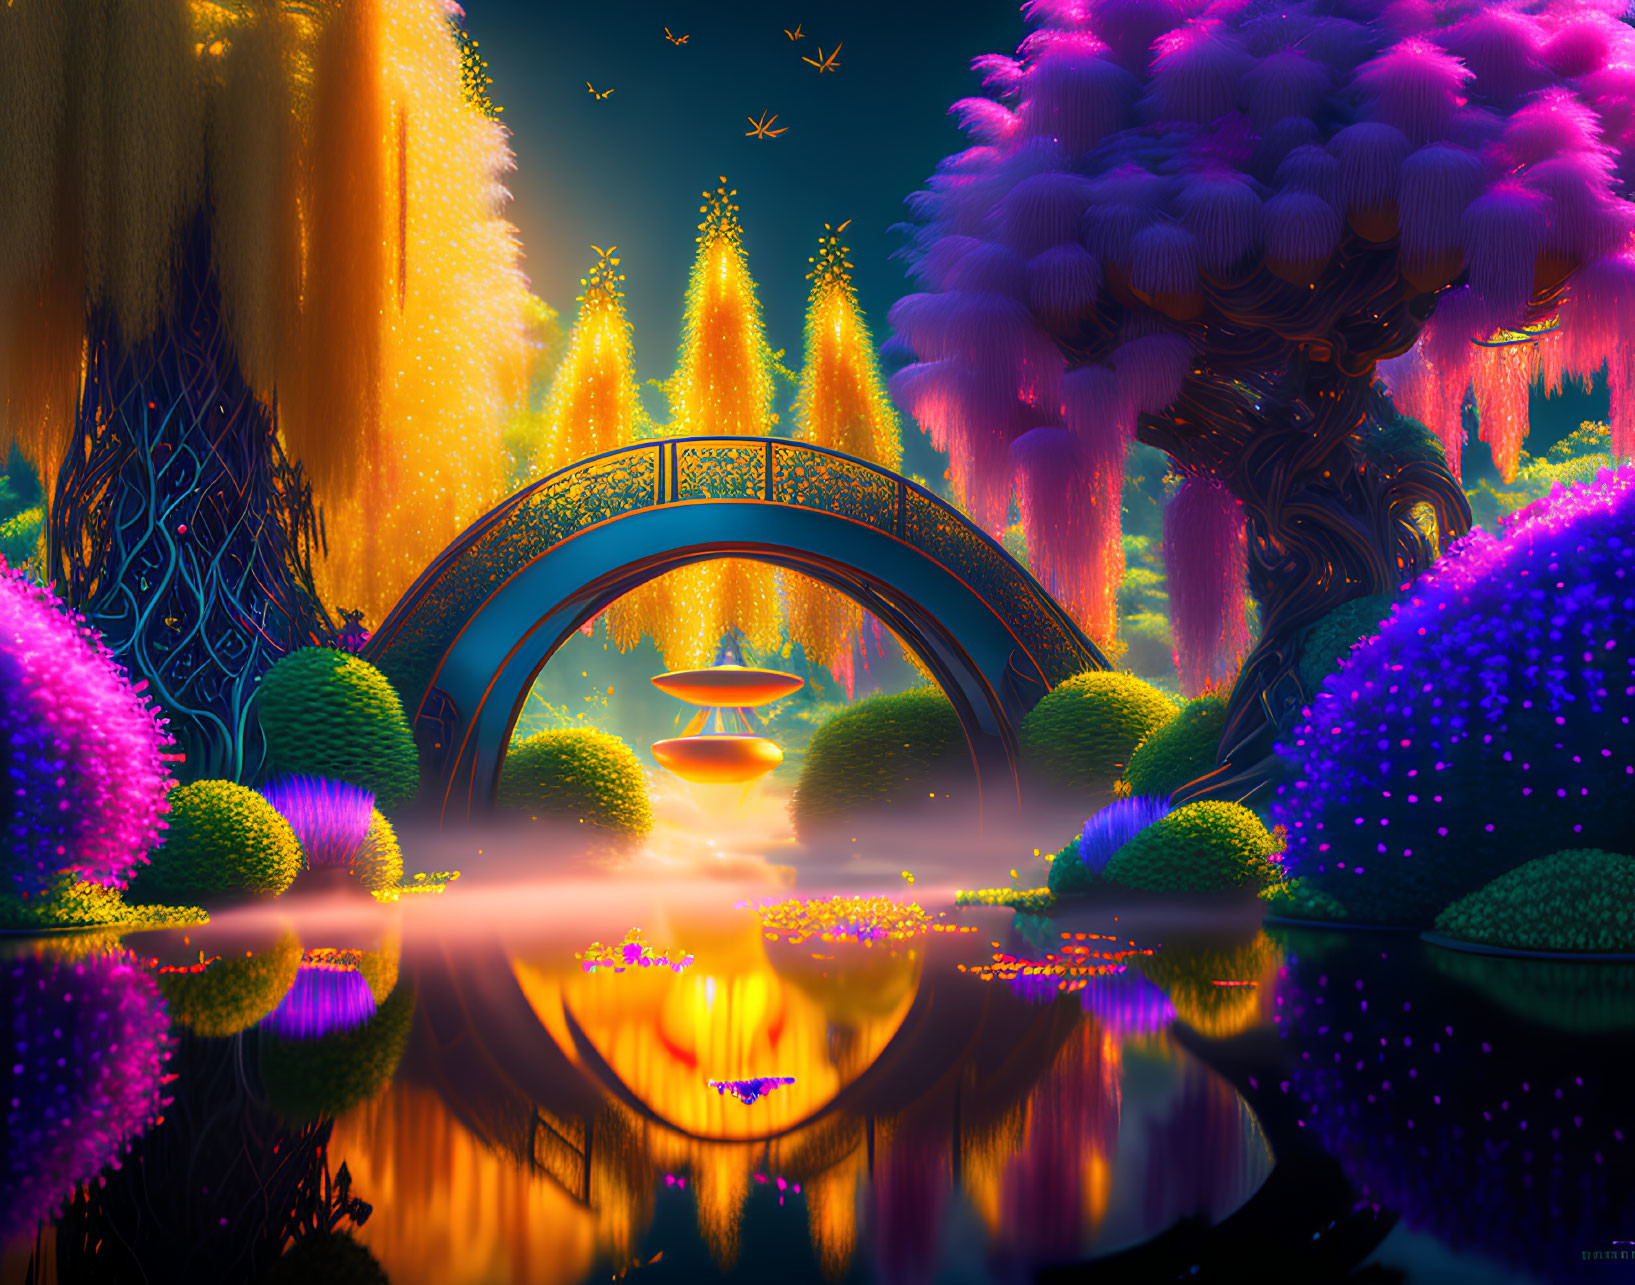 Colorful Fantasy Landscape with Reflective River and Ornate Bridge